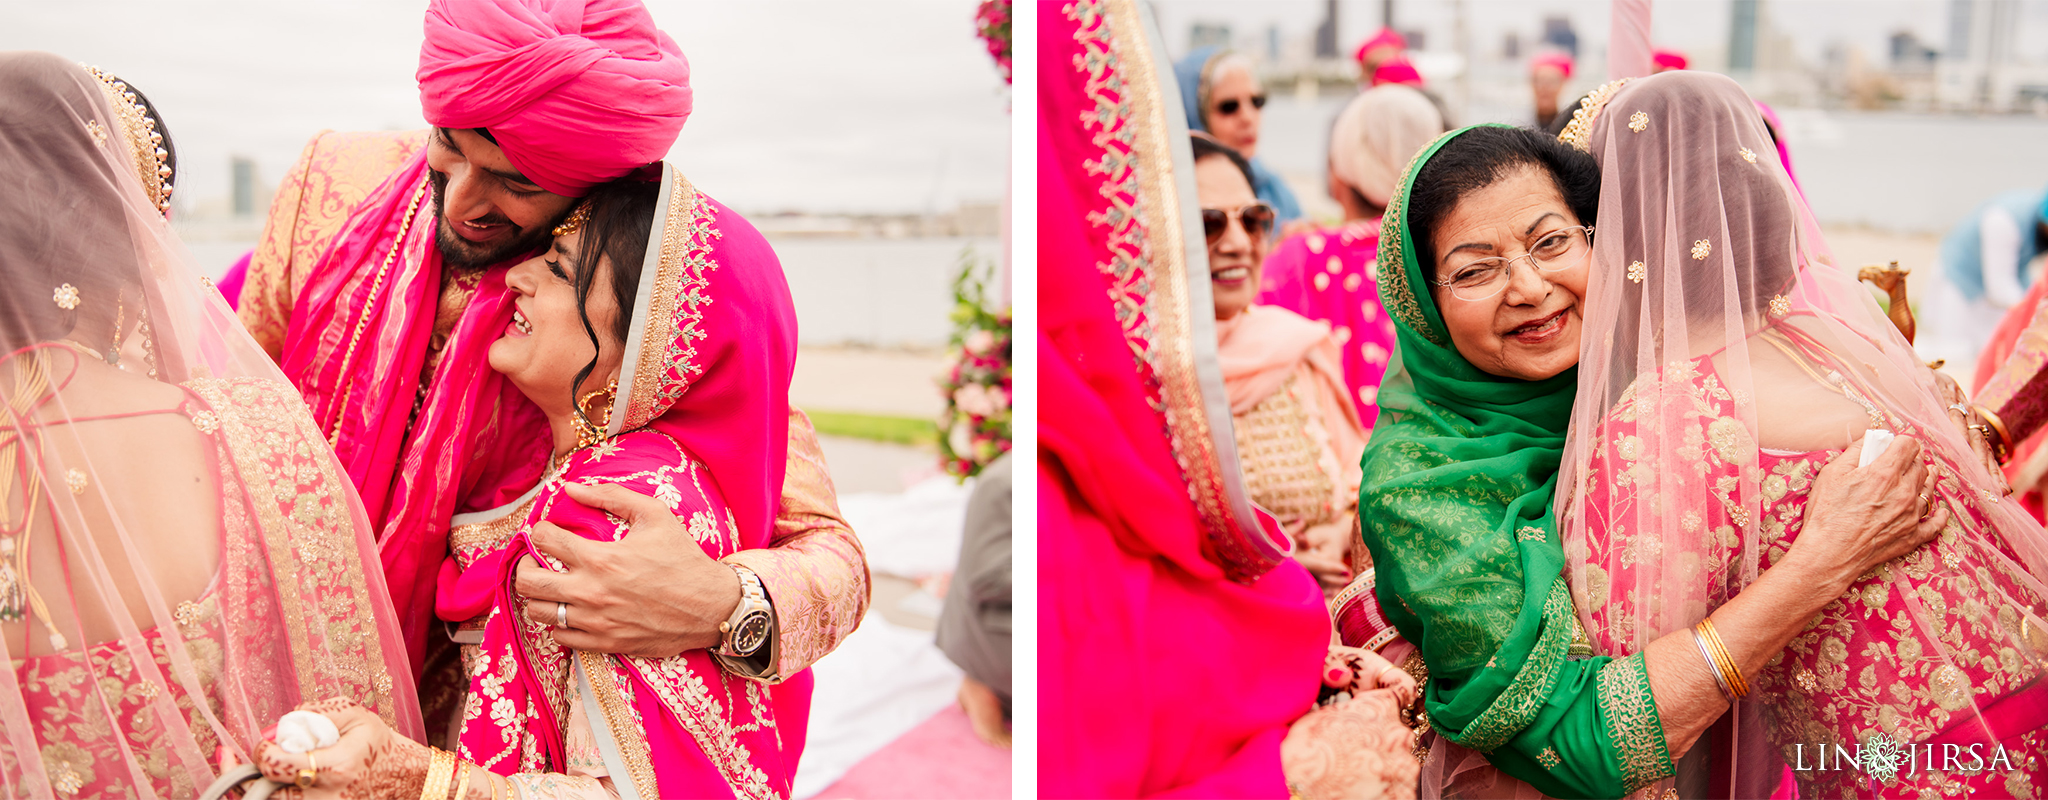 23 Coronado Resort and Spa San Diego Punjabi Wedding Photography